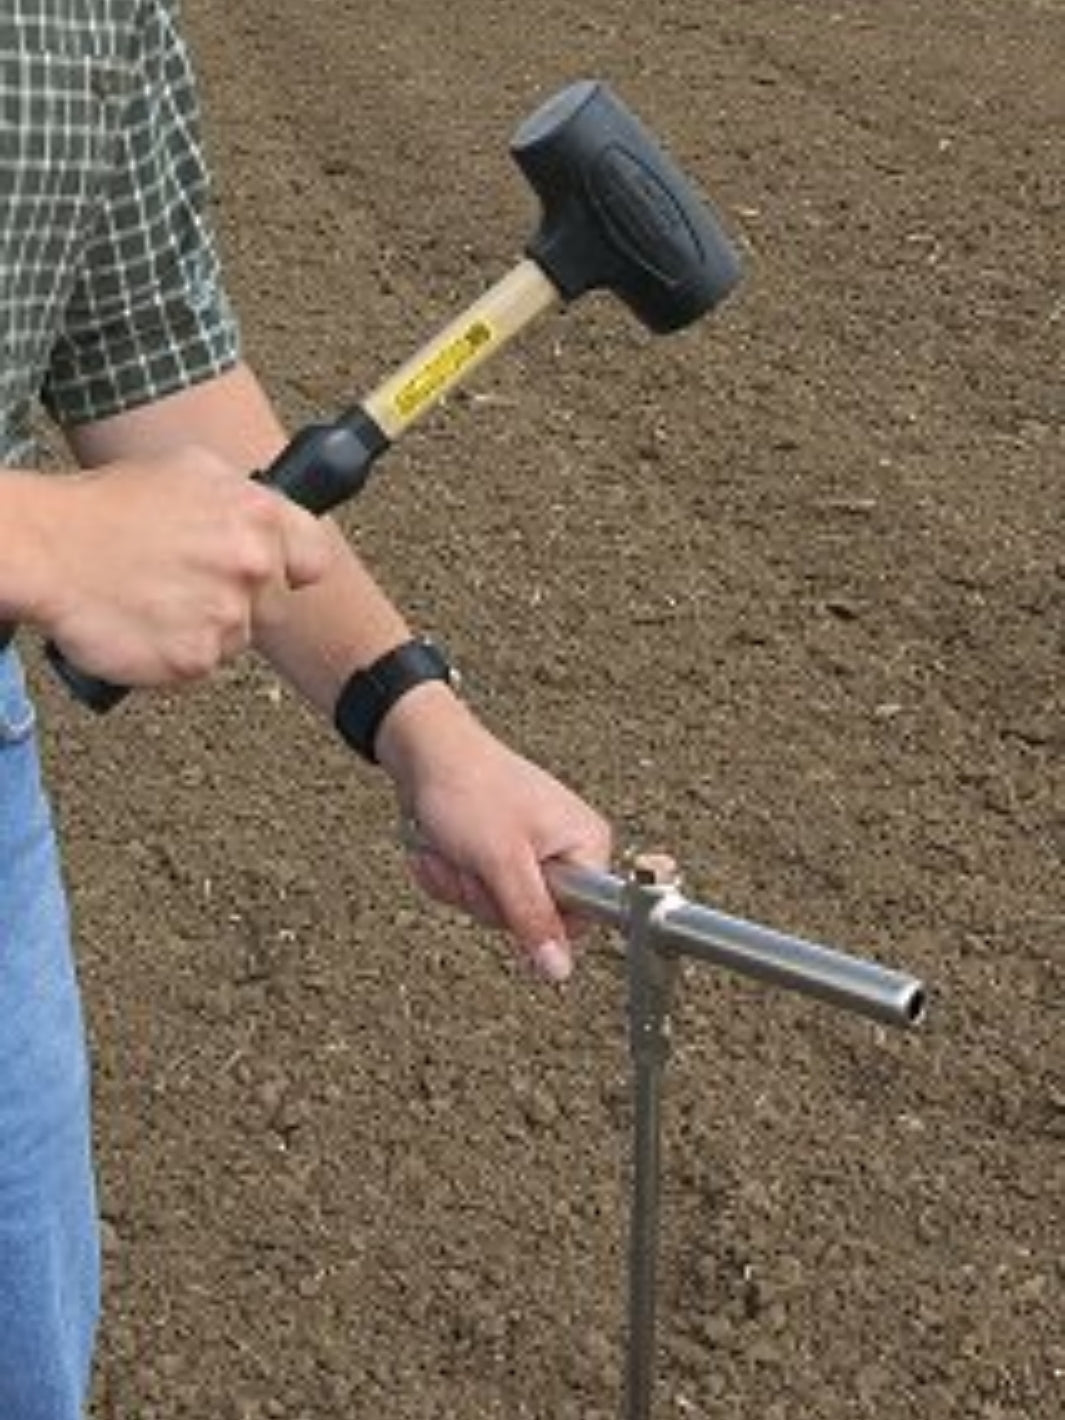 JMC T-Handle used for sampling tough soil